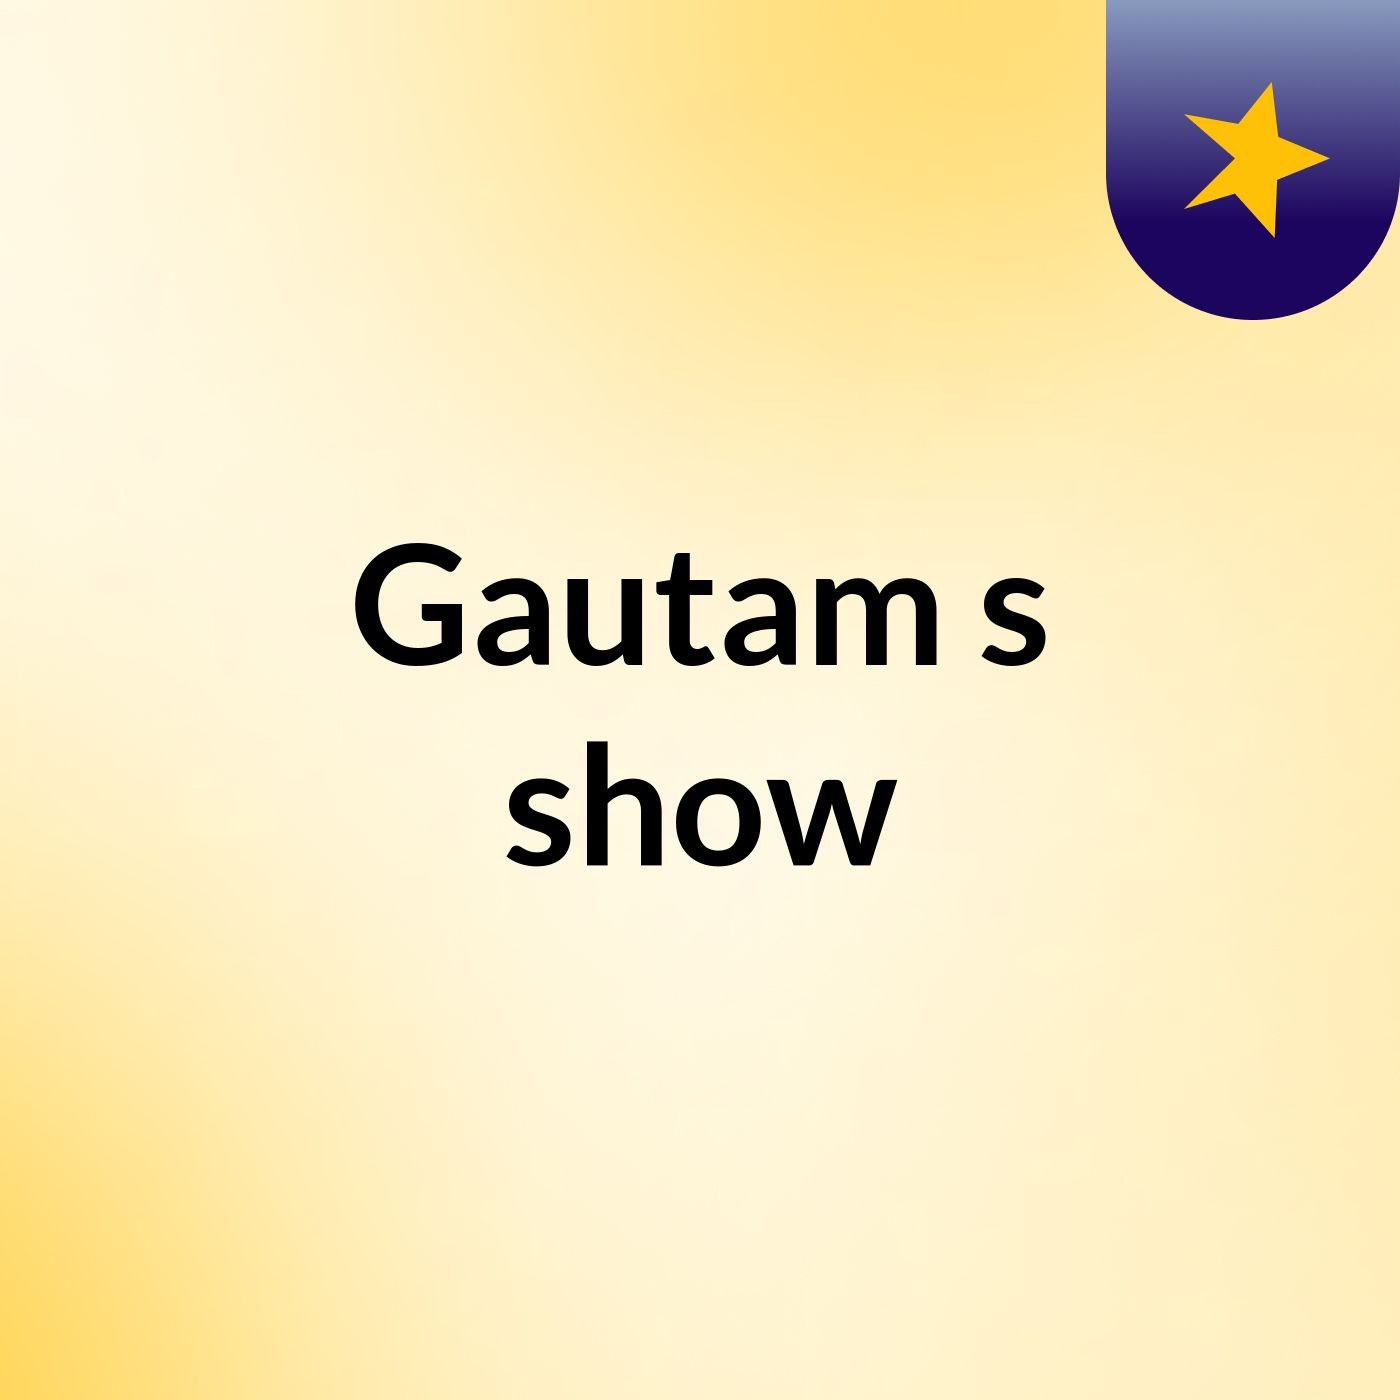 Gautam's show